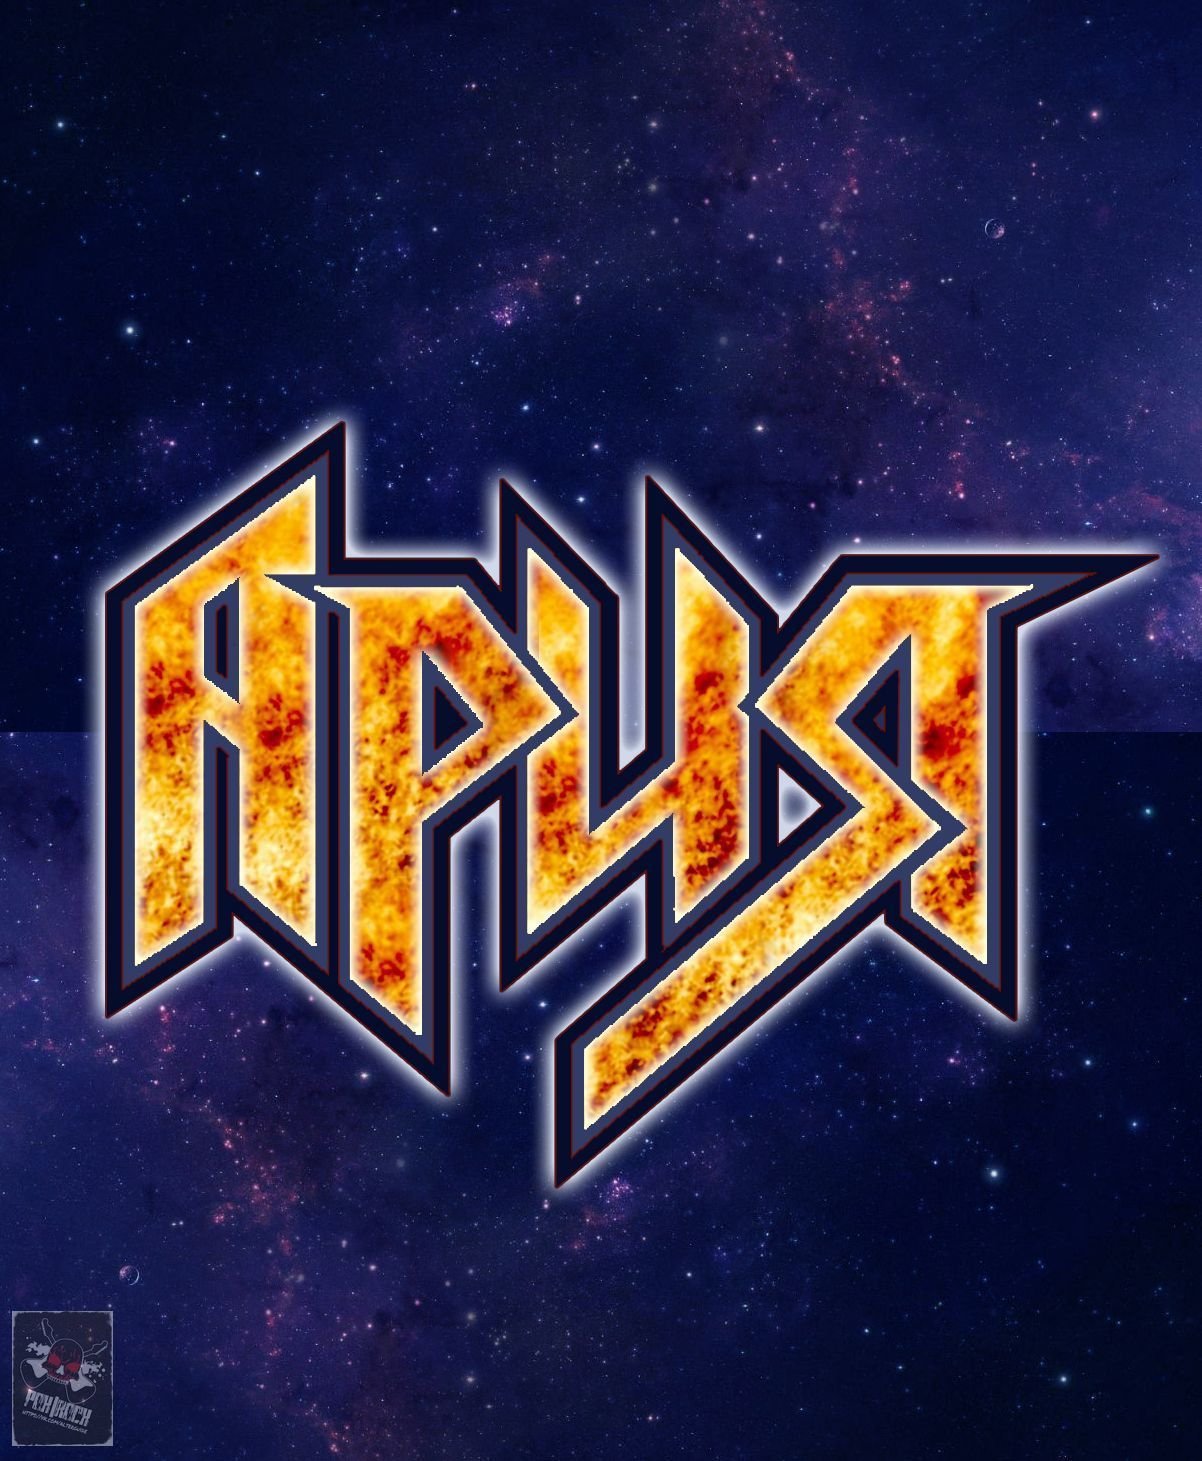 Метал ария. Ария логотип группы. Группа Ария лейбл. Логотип рок группы Ария. Группа Ария лого.